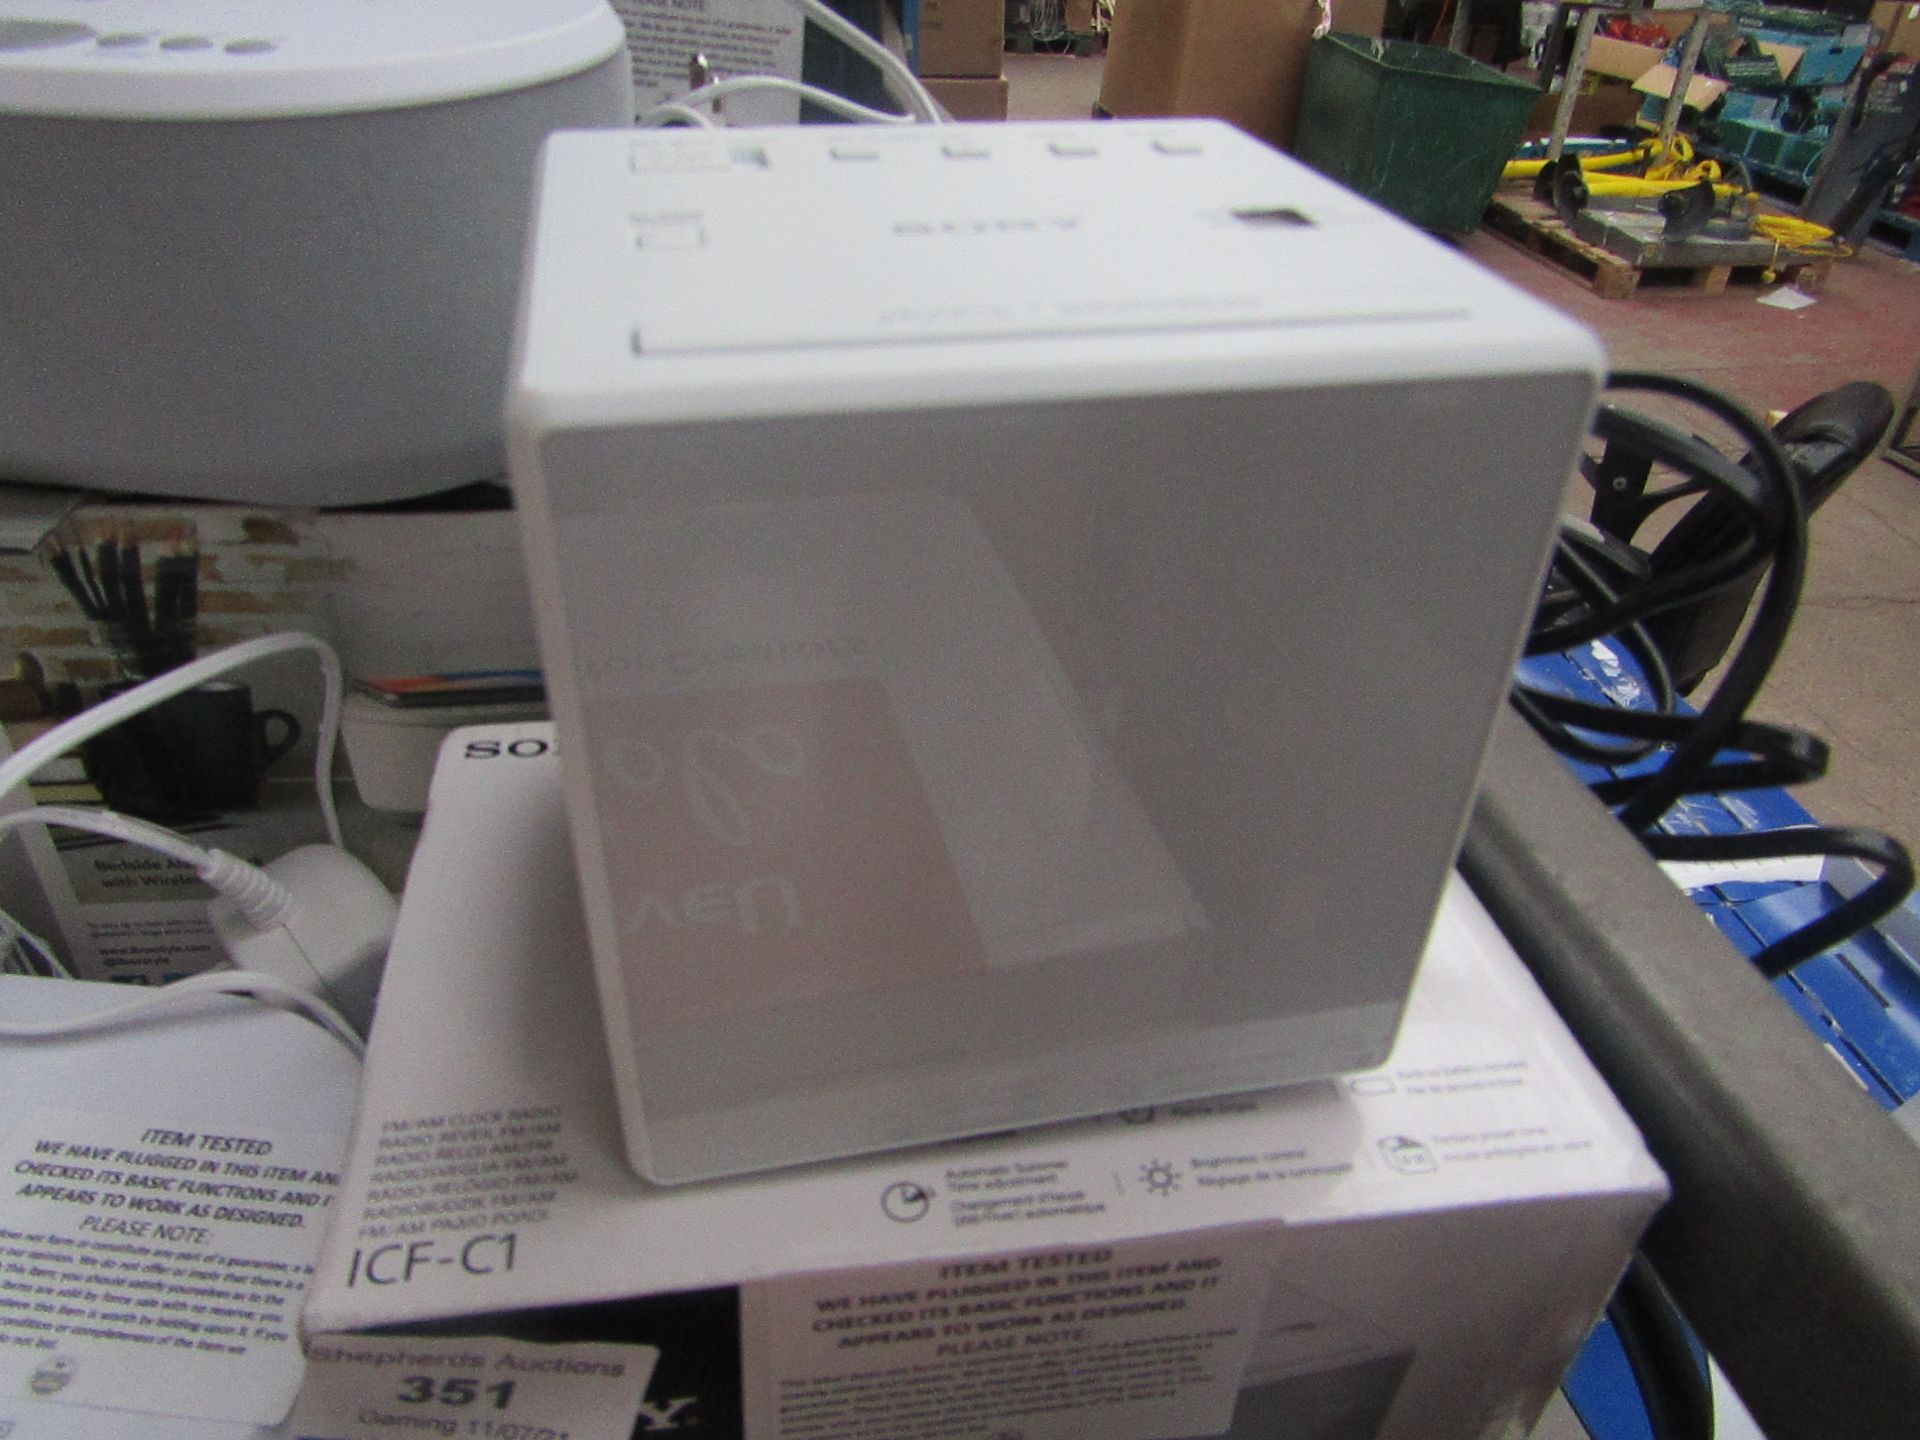 Sony ICF-C1 radio alarm clock, tested working on radio function, comes with original box